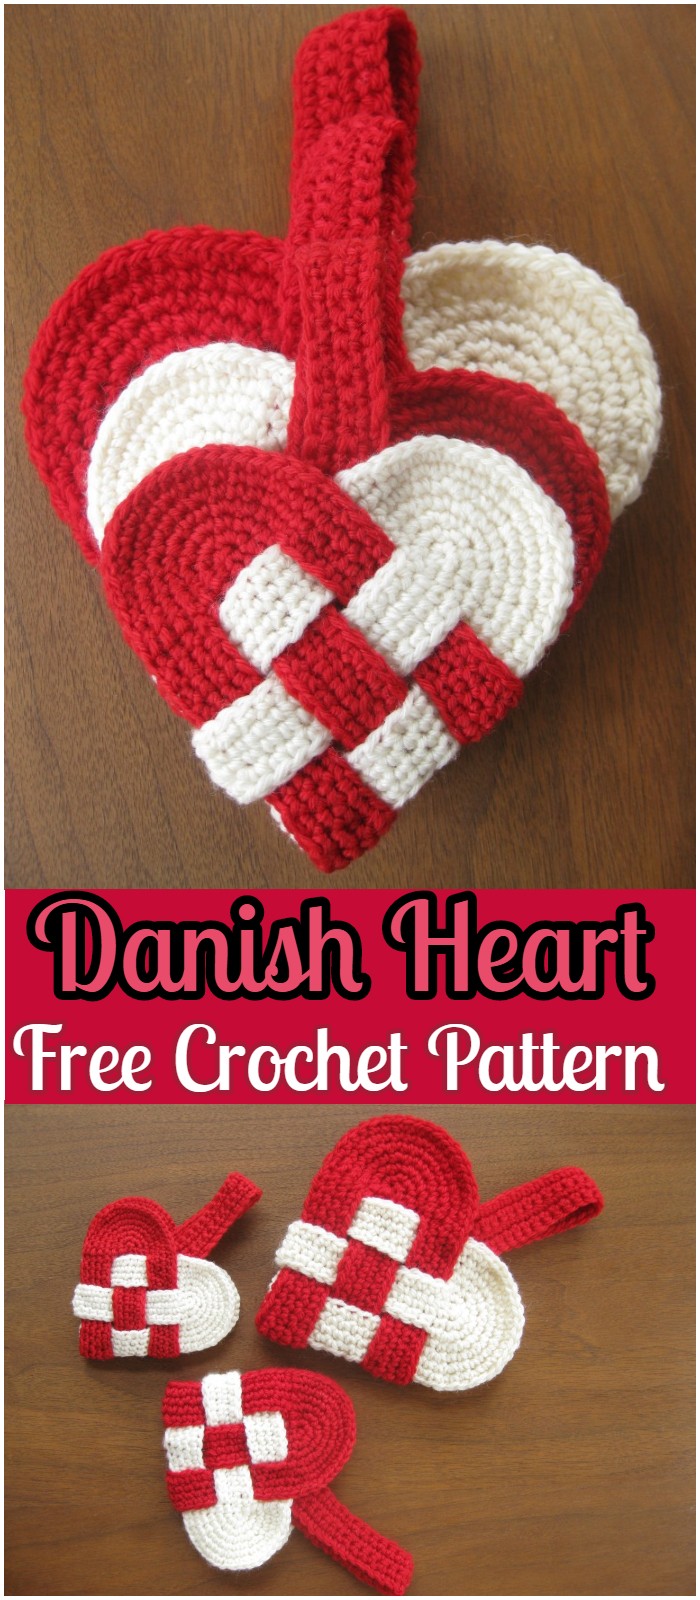 Crochet Danish Heart